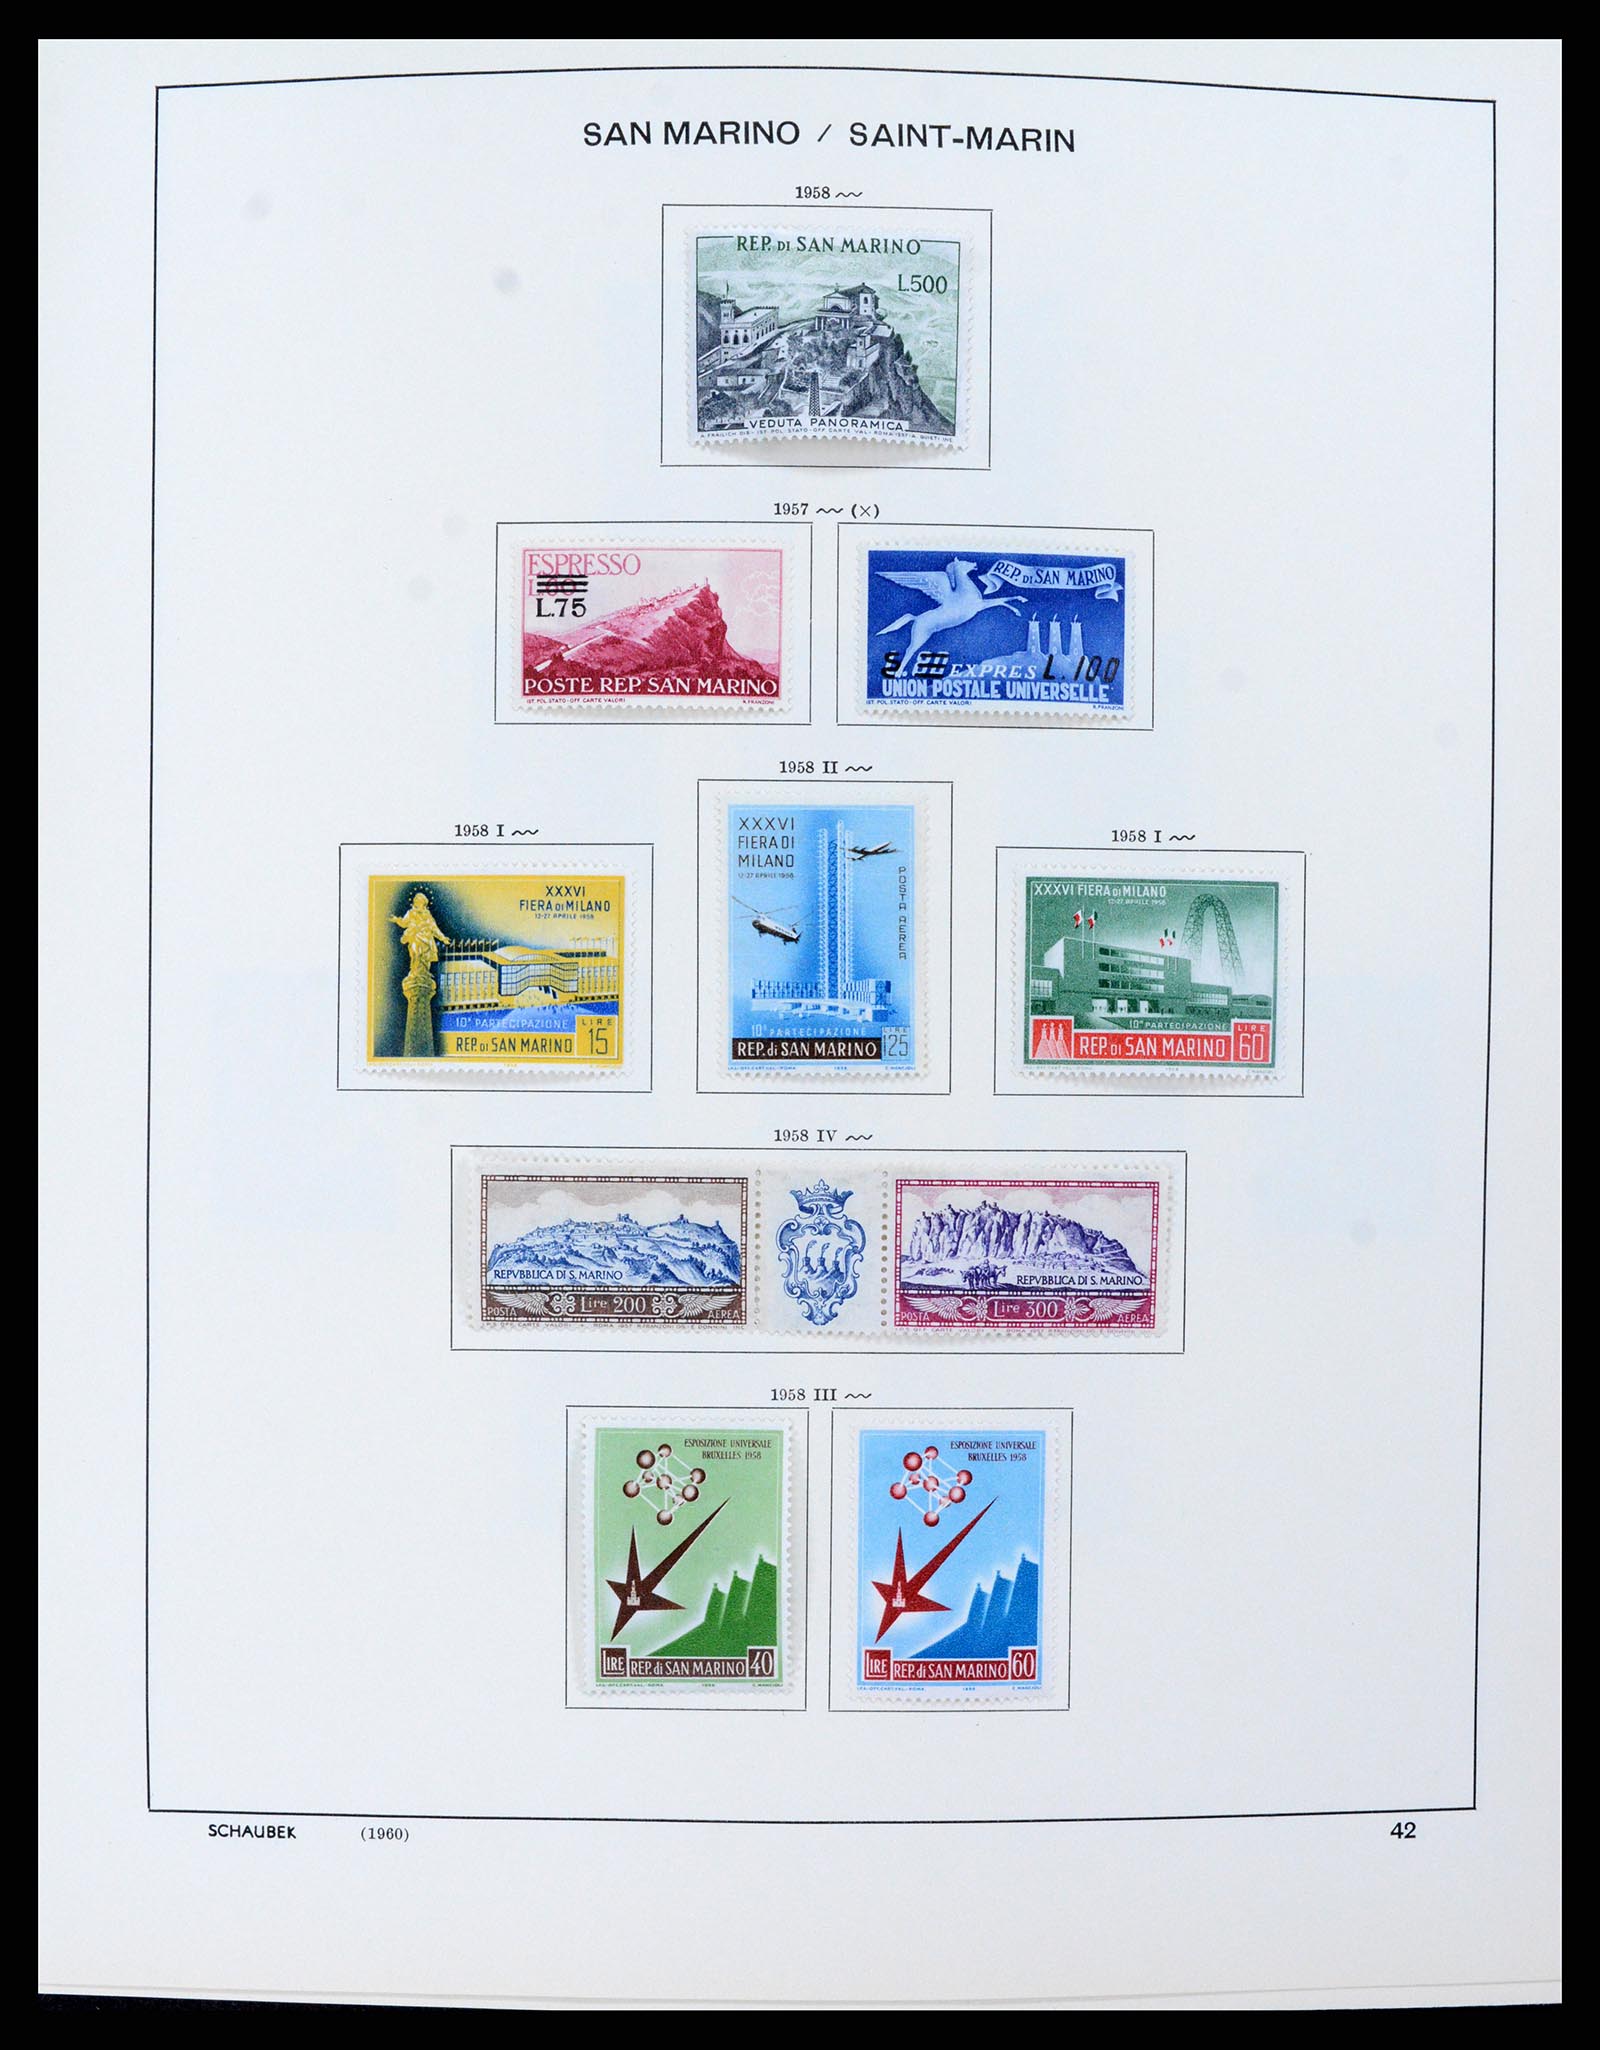 37556 042 - Stamp collection 37556 San Marino 1877-2017.